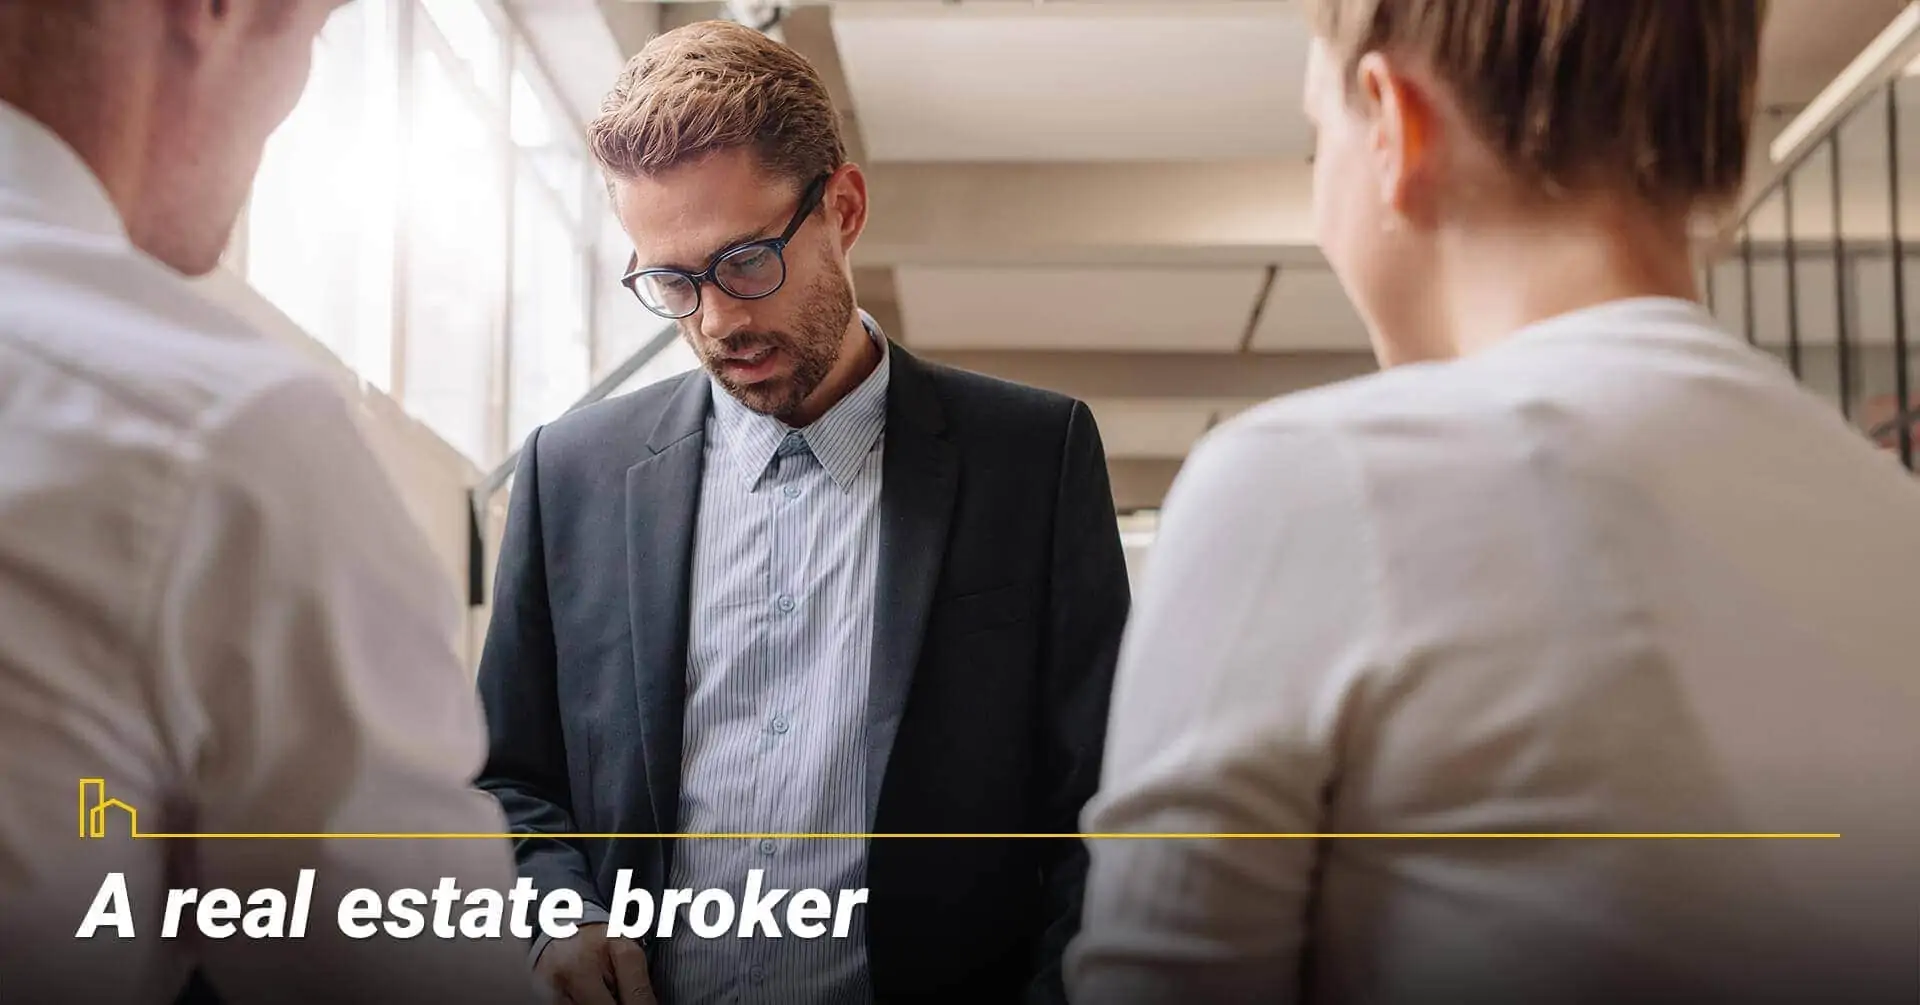 A real estate broker, know your real estate broker